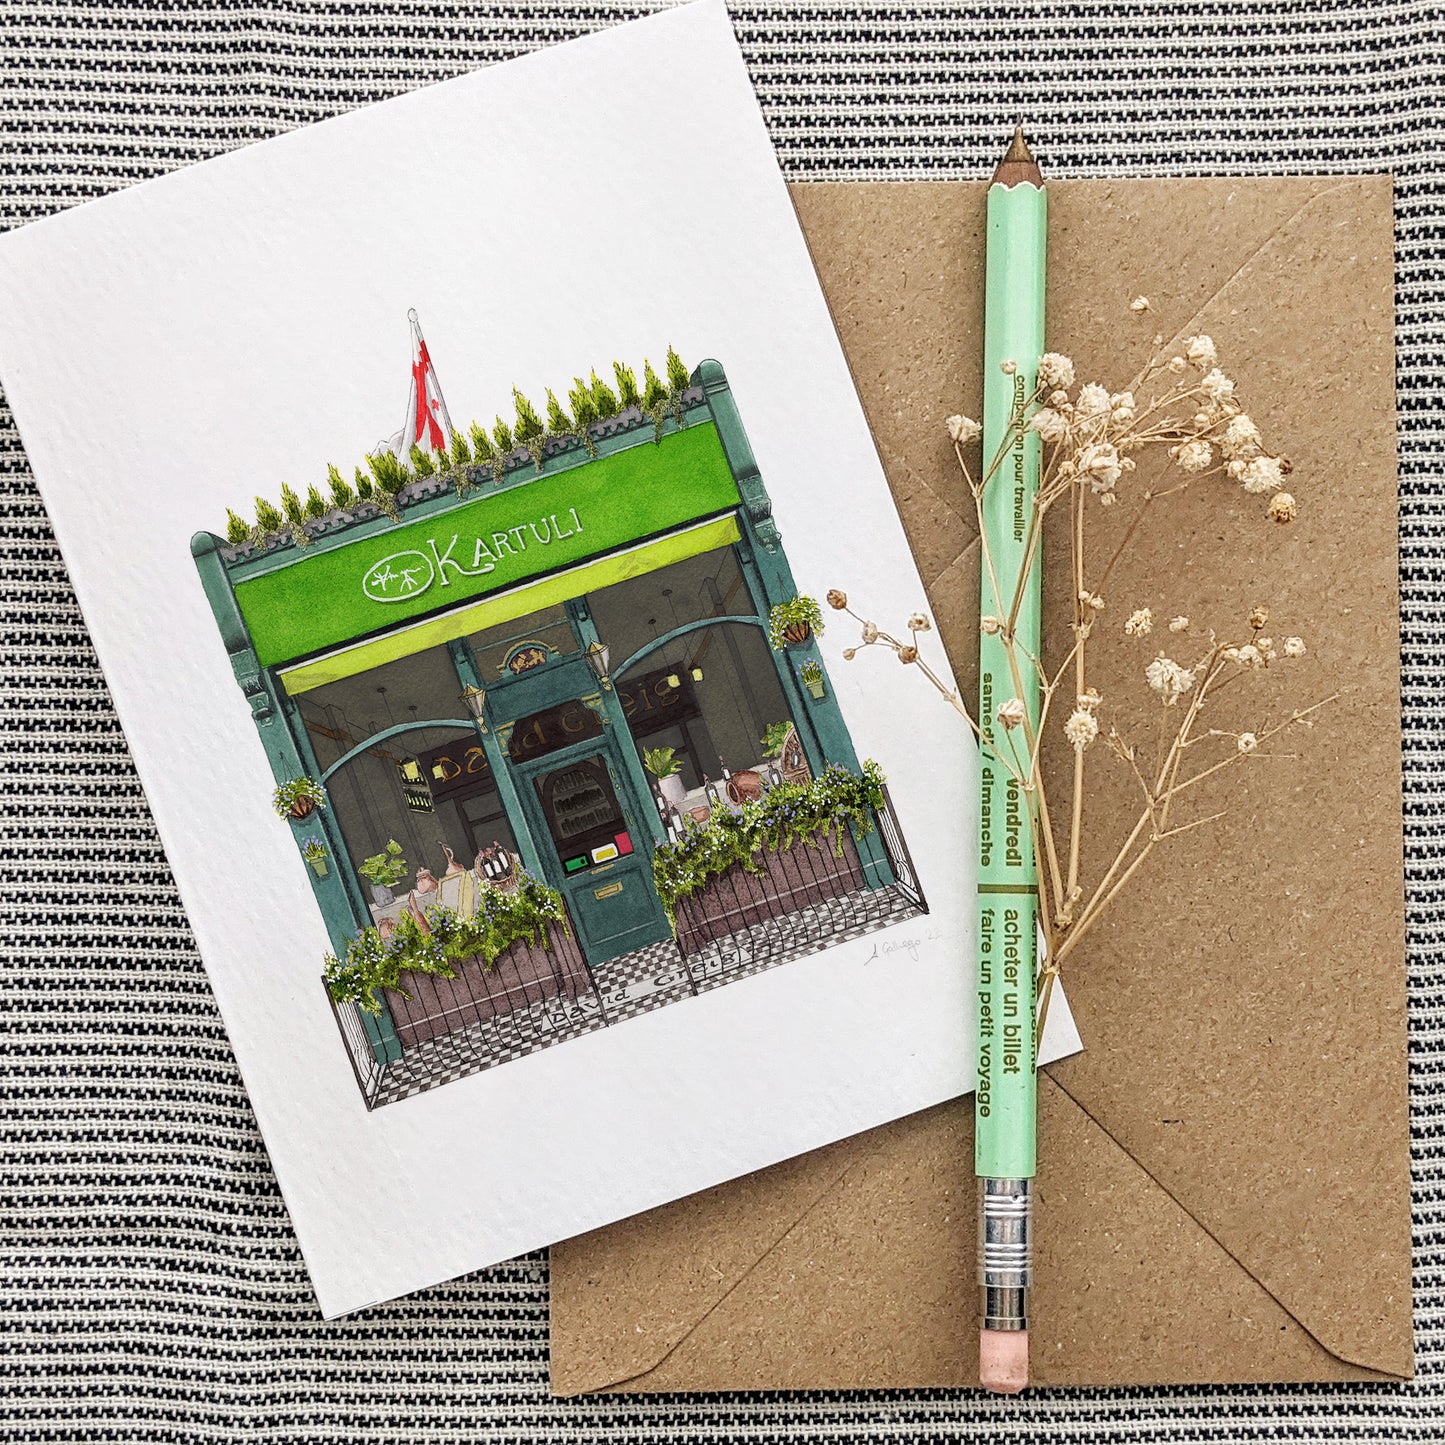 East Dulwich - Kartuli Georgian Restaurant - Greeting card with envelope